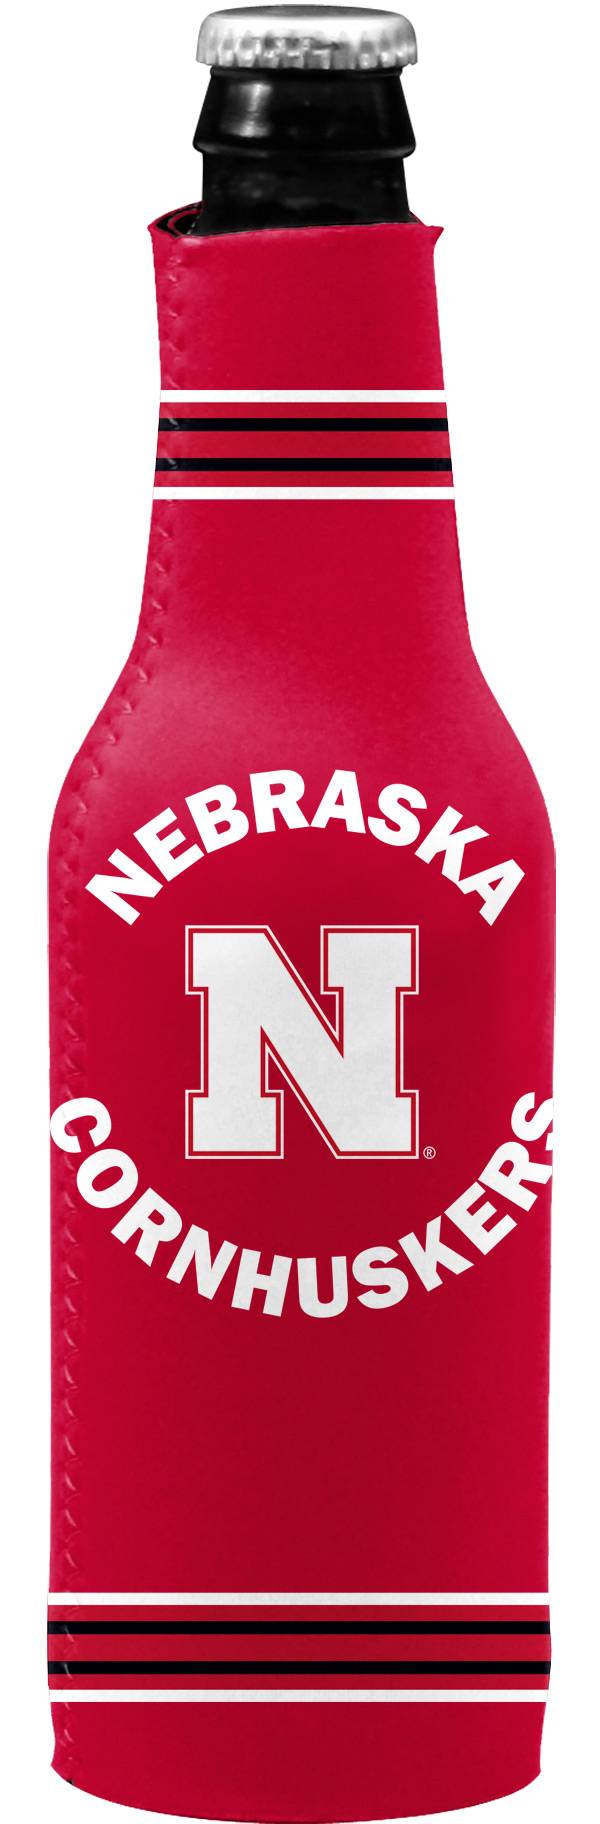 Nebraska Cornhuskers Bottle Koozie product image